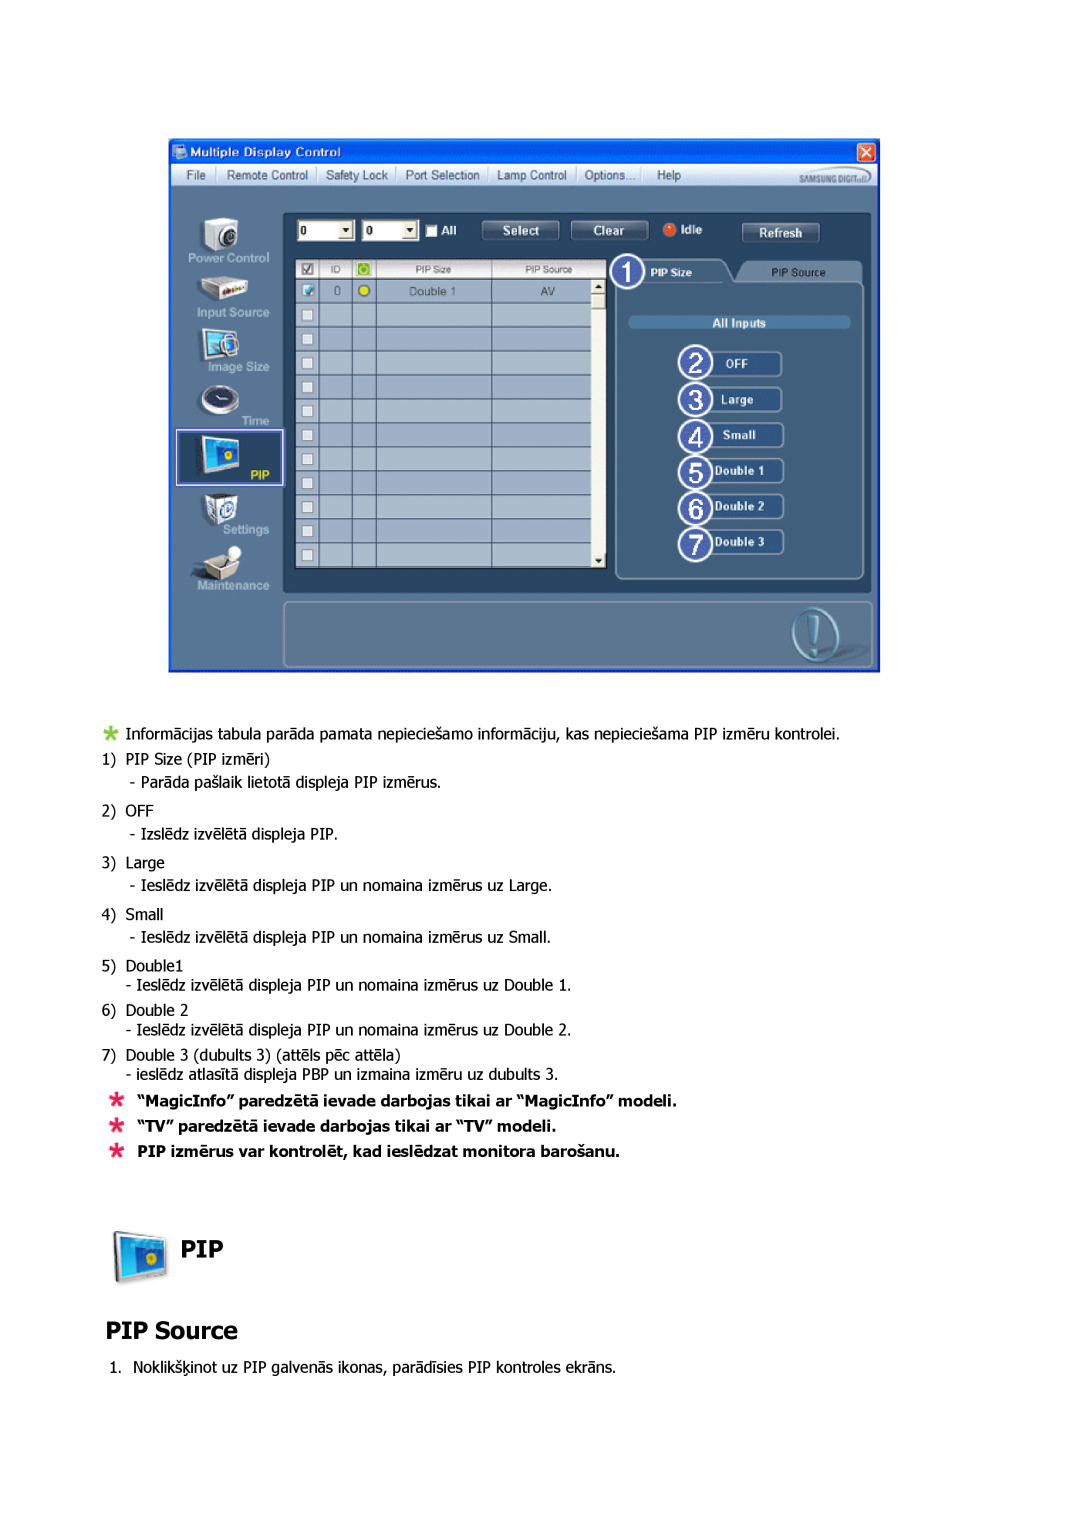 Samsung PH50KPPLBF/EN, PH63KPFLBF/EN manual PIP PIP Source, PIP izmērus var kontrolēt, kad ieslēdzat monitora barošanu 